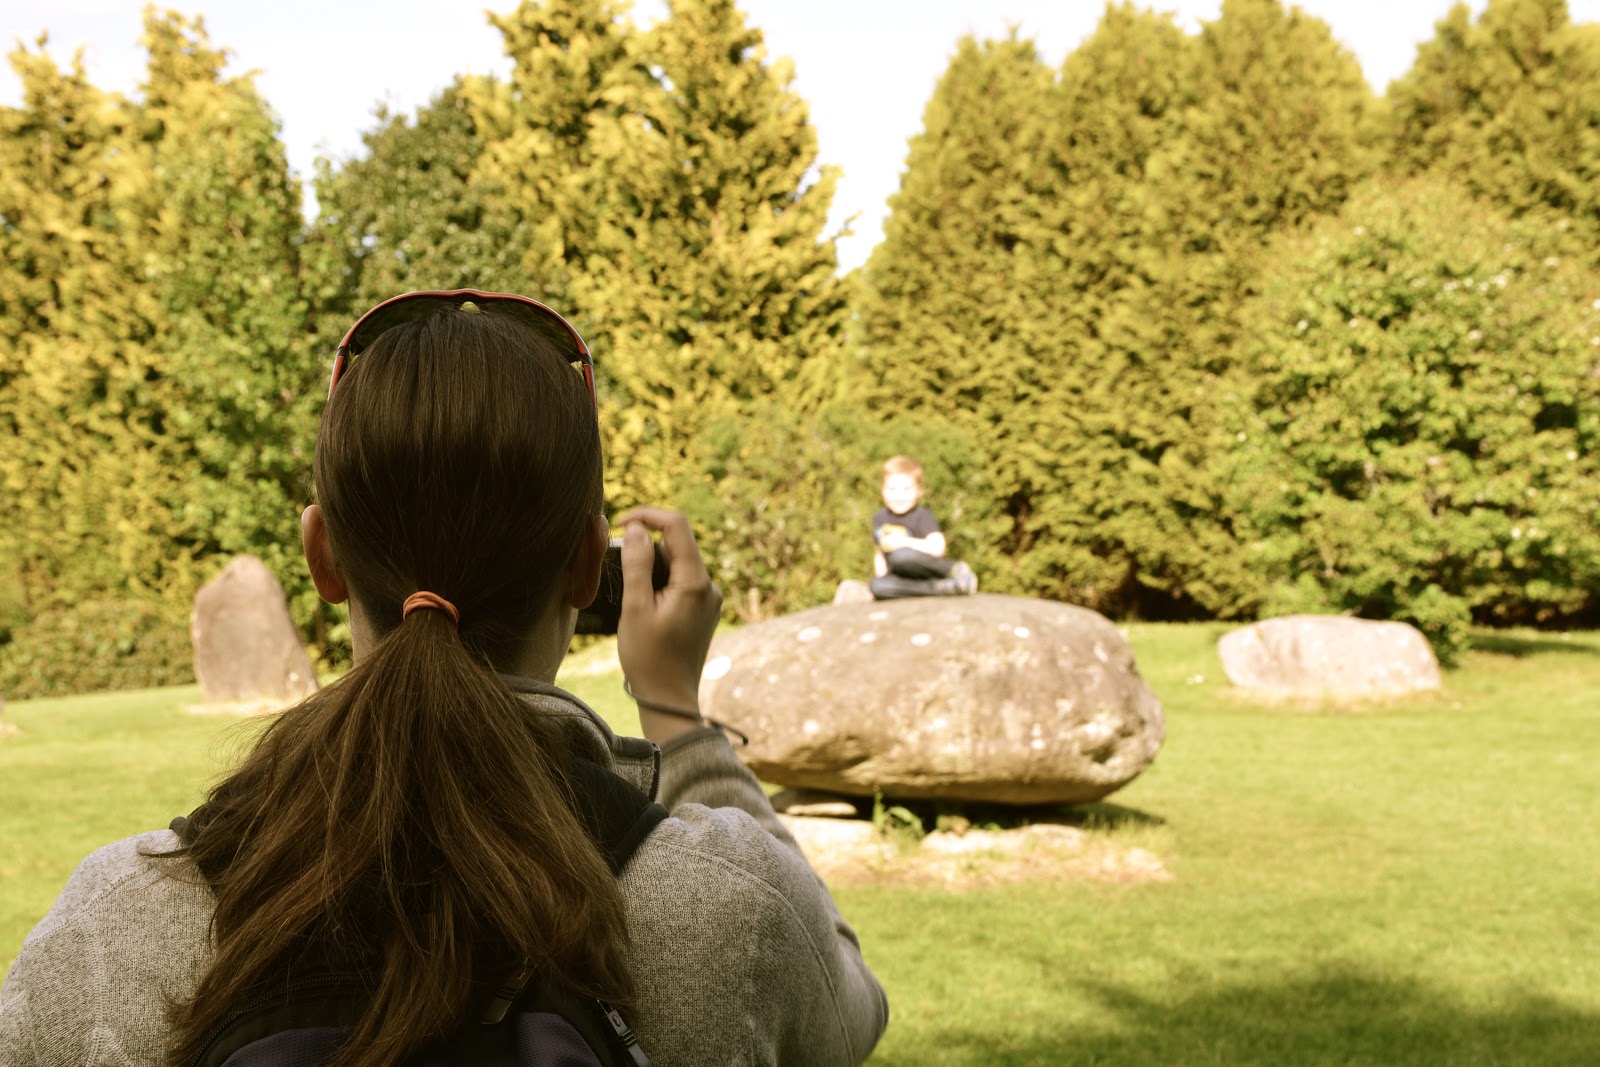 Jackson posing within the Kenmare Stone Circle in Ireland